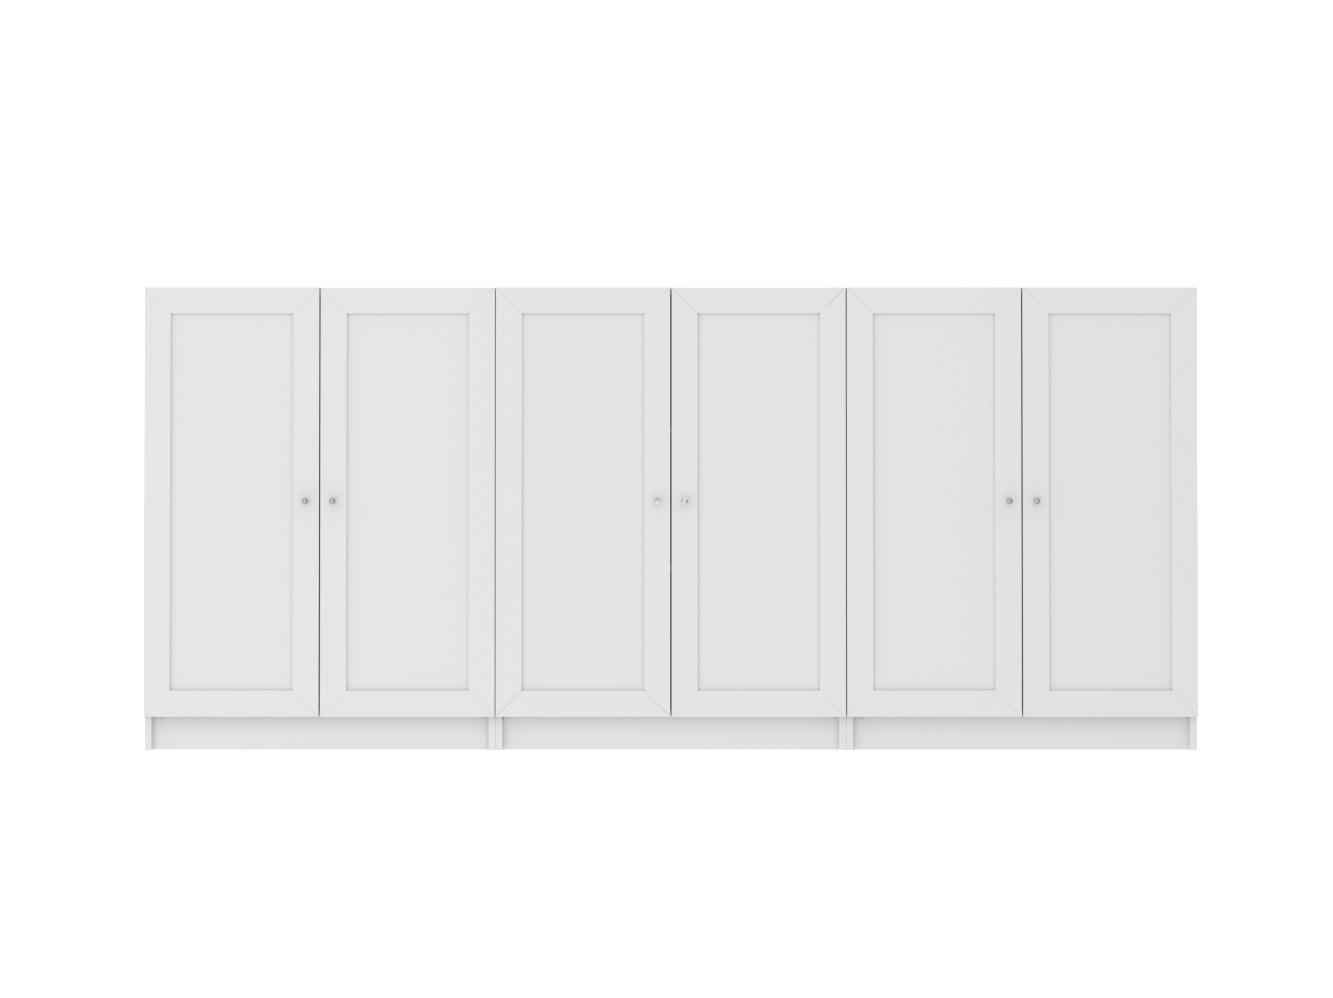 Изображение товара Комод Билли 215 white ИКЕА (IKEA), 240x30x106 см на сайте adeta.ru